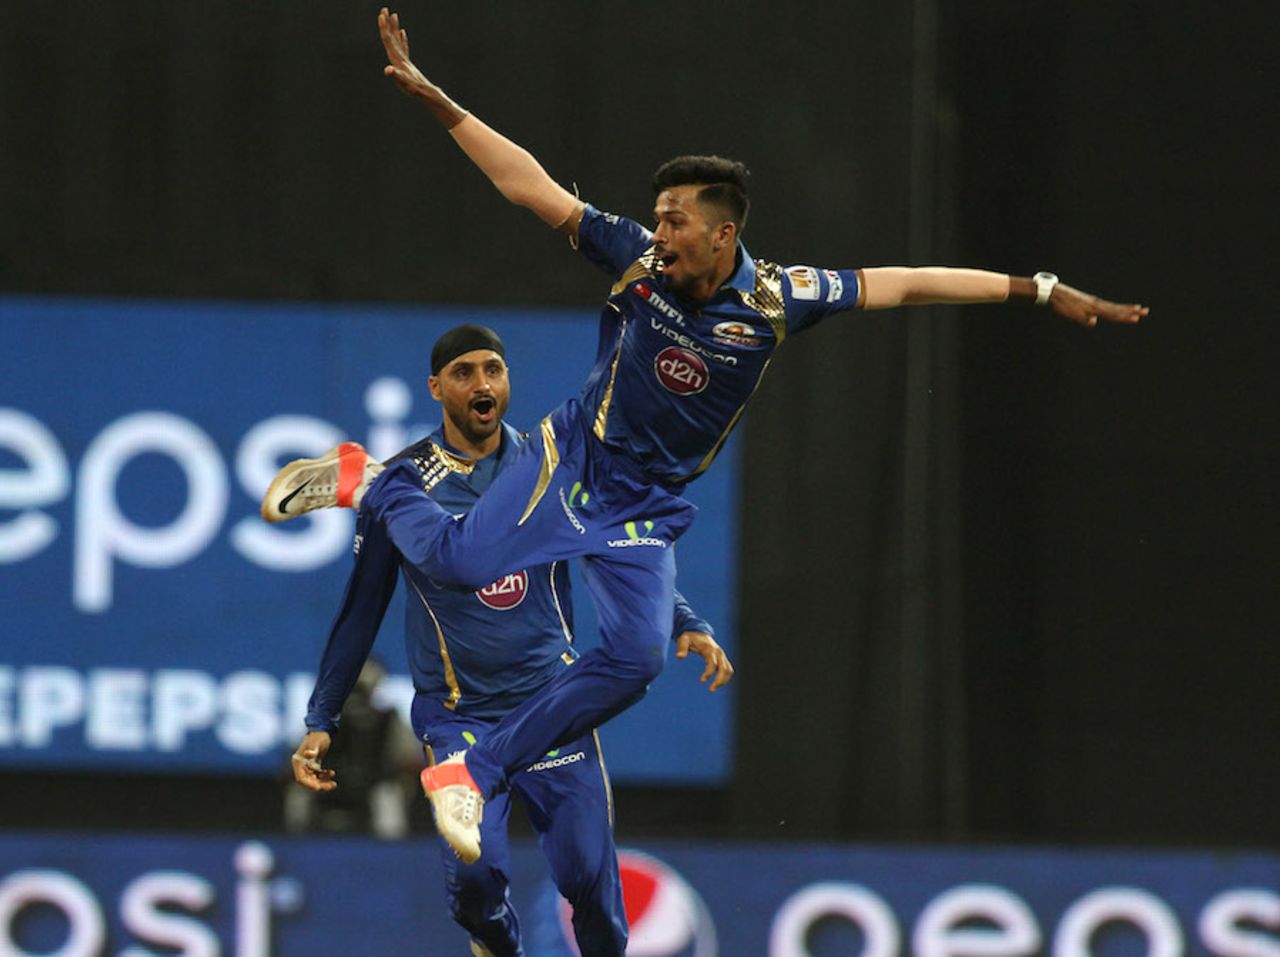 Zero gravity: Hardik Pandya is in the stratosphere after picking up his first IPL wicket, Mumbai Indians v Delhi Daredevils, IPL 2015, Mumbai, May 5, 2015